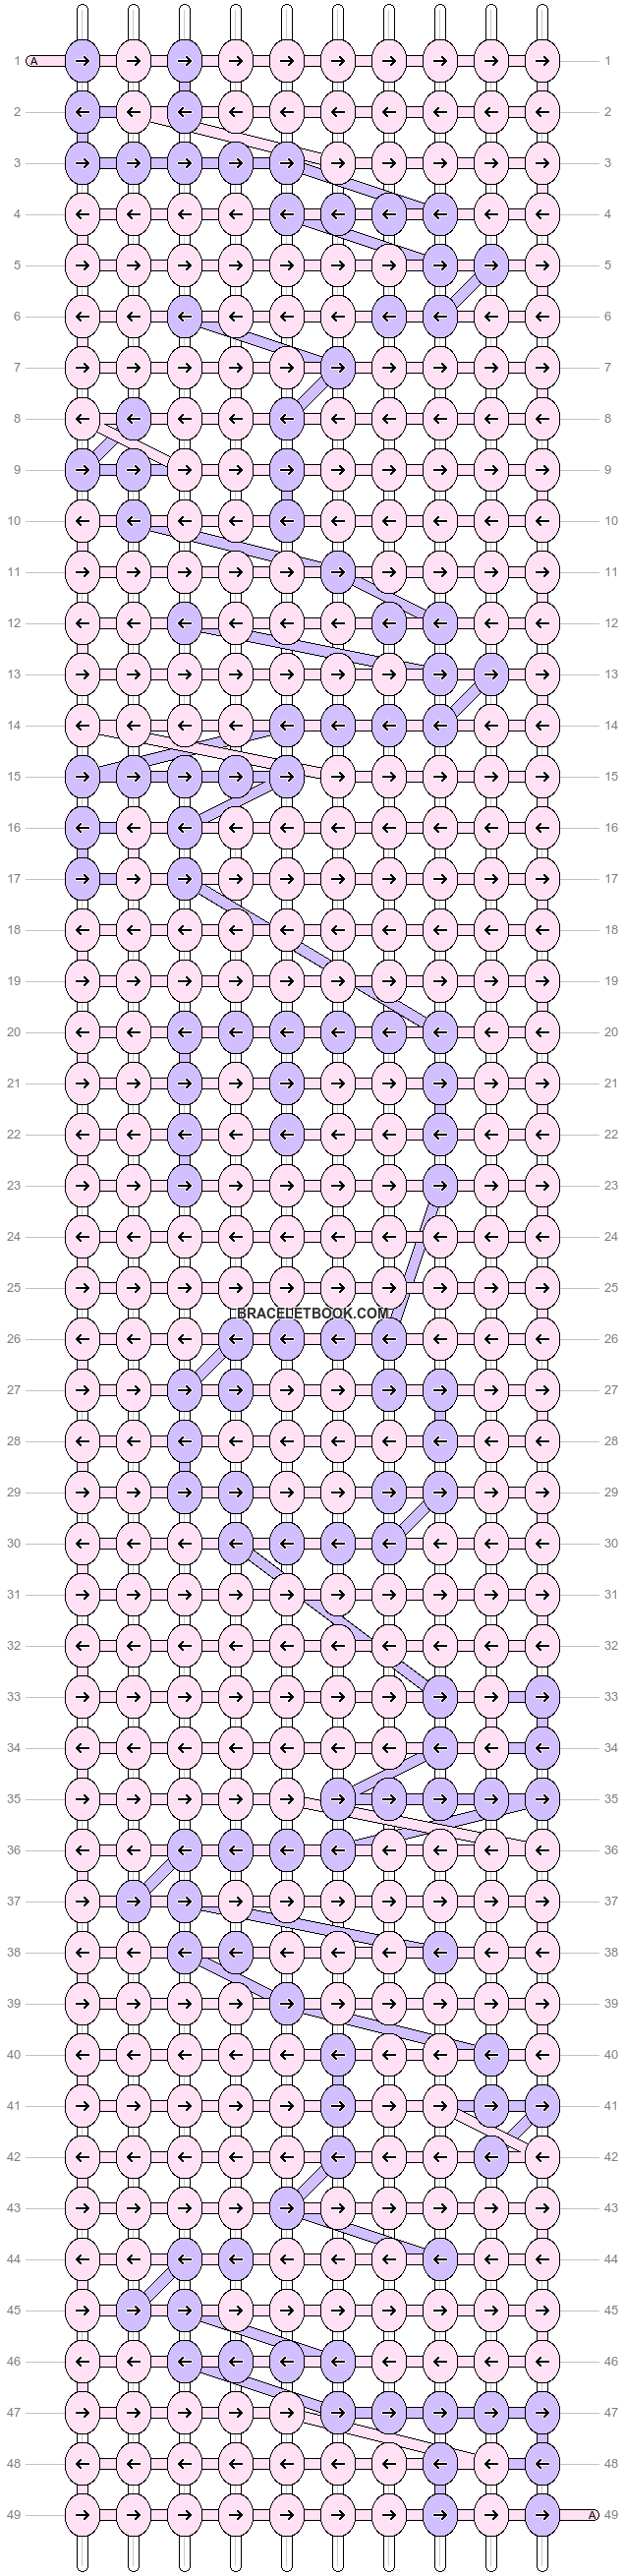 Alpha pattern #29169 variation #85401 pattern